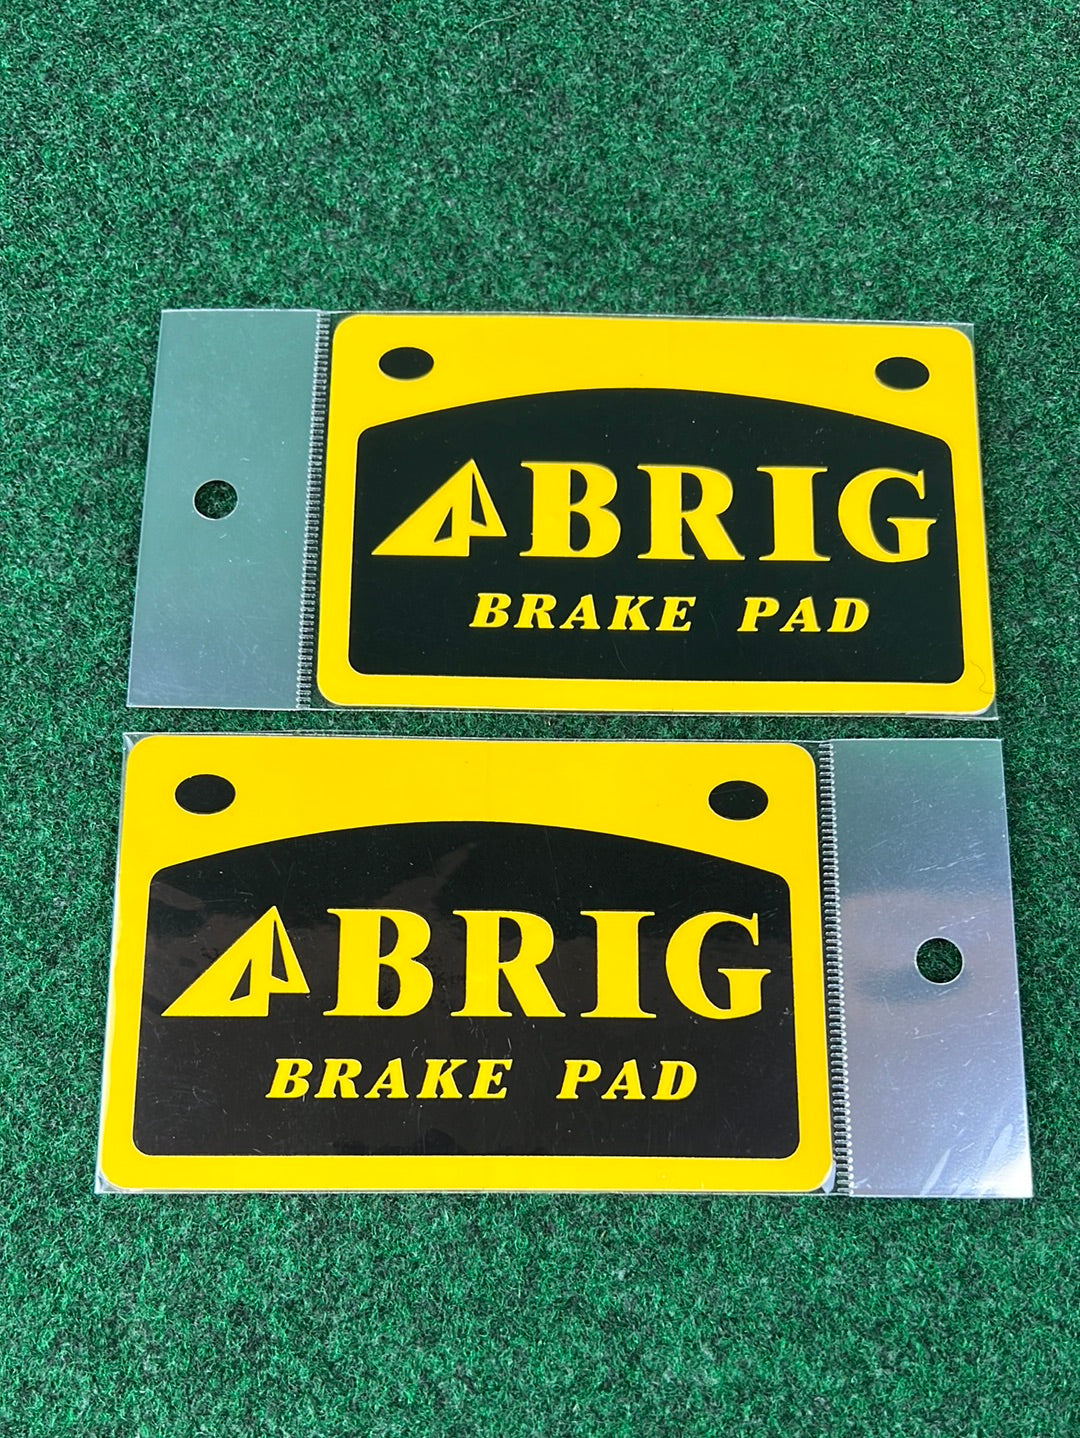 BRIG Brake Pad - Logo Sticker Set of 2